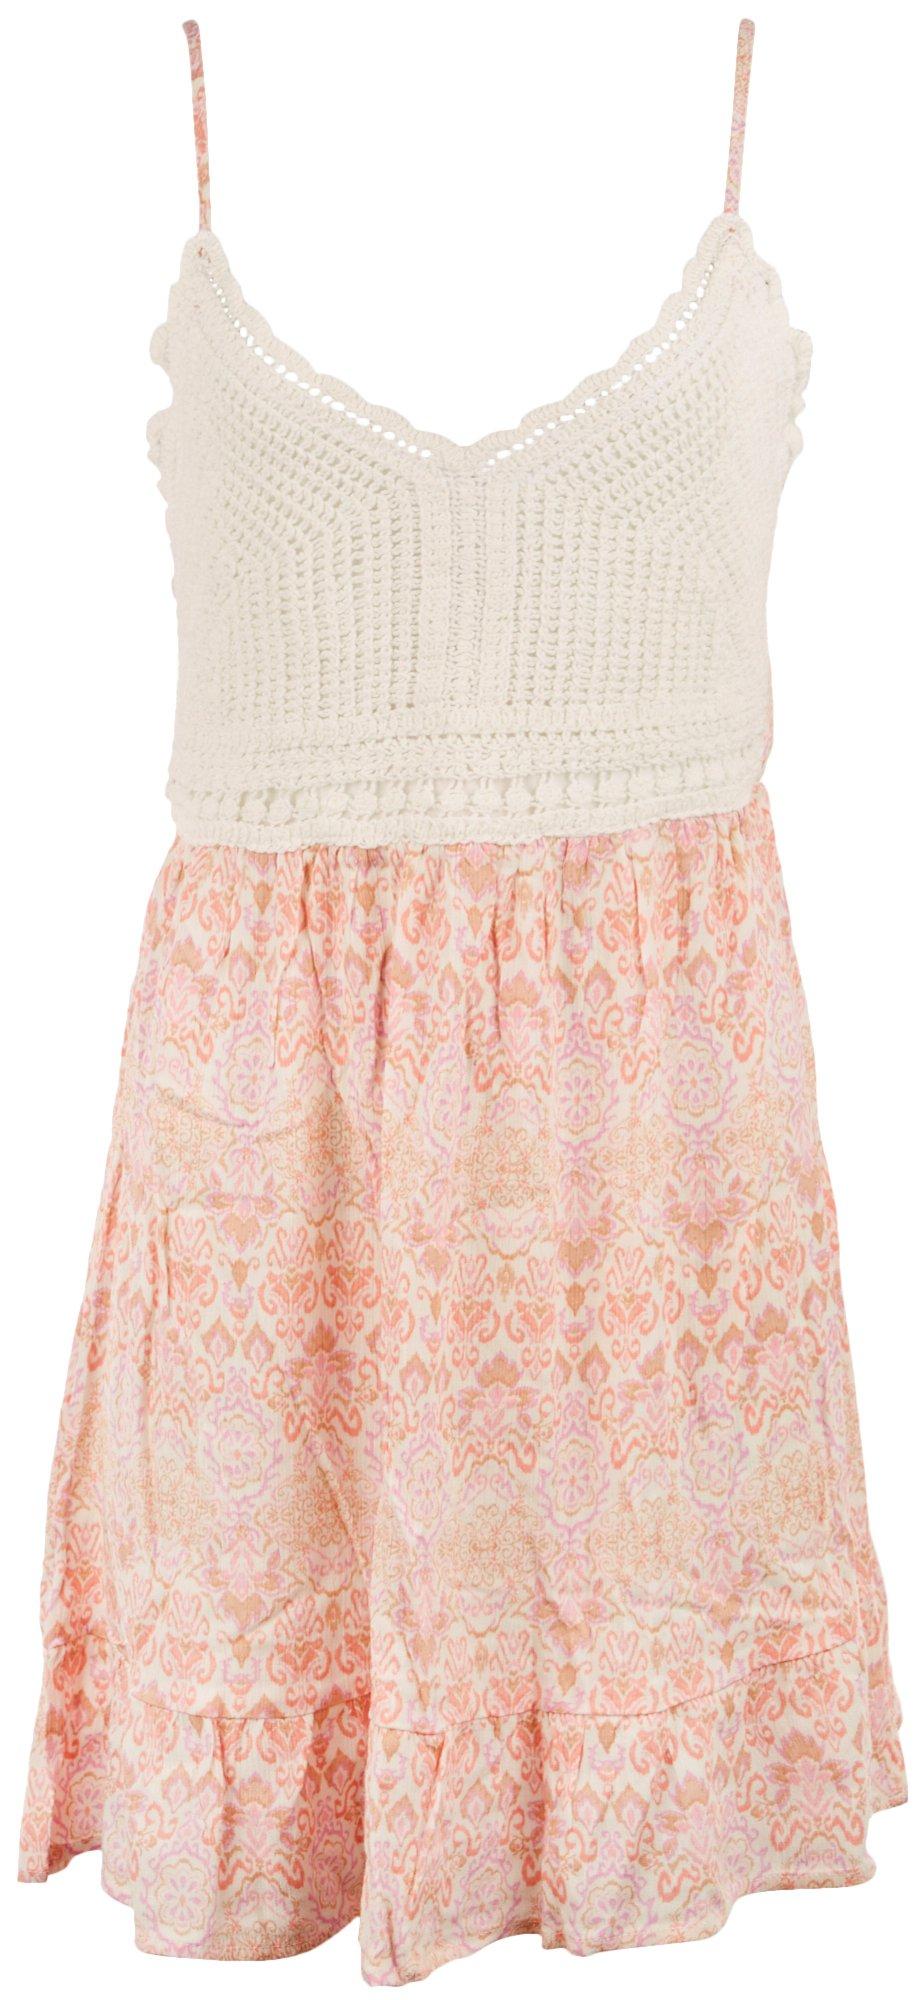 Juniors Crochet Sleeveless Dress